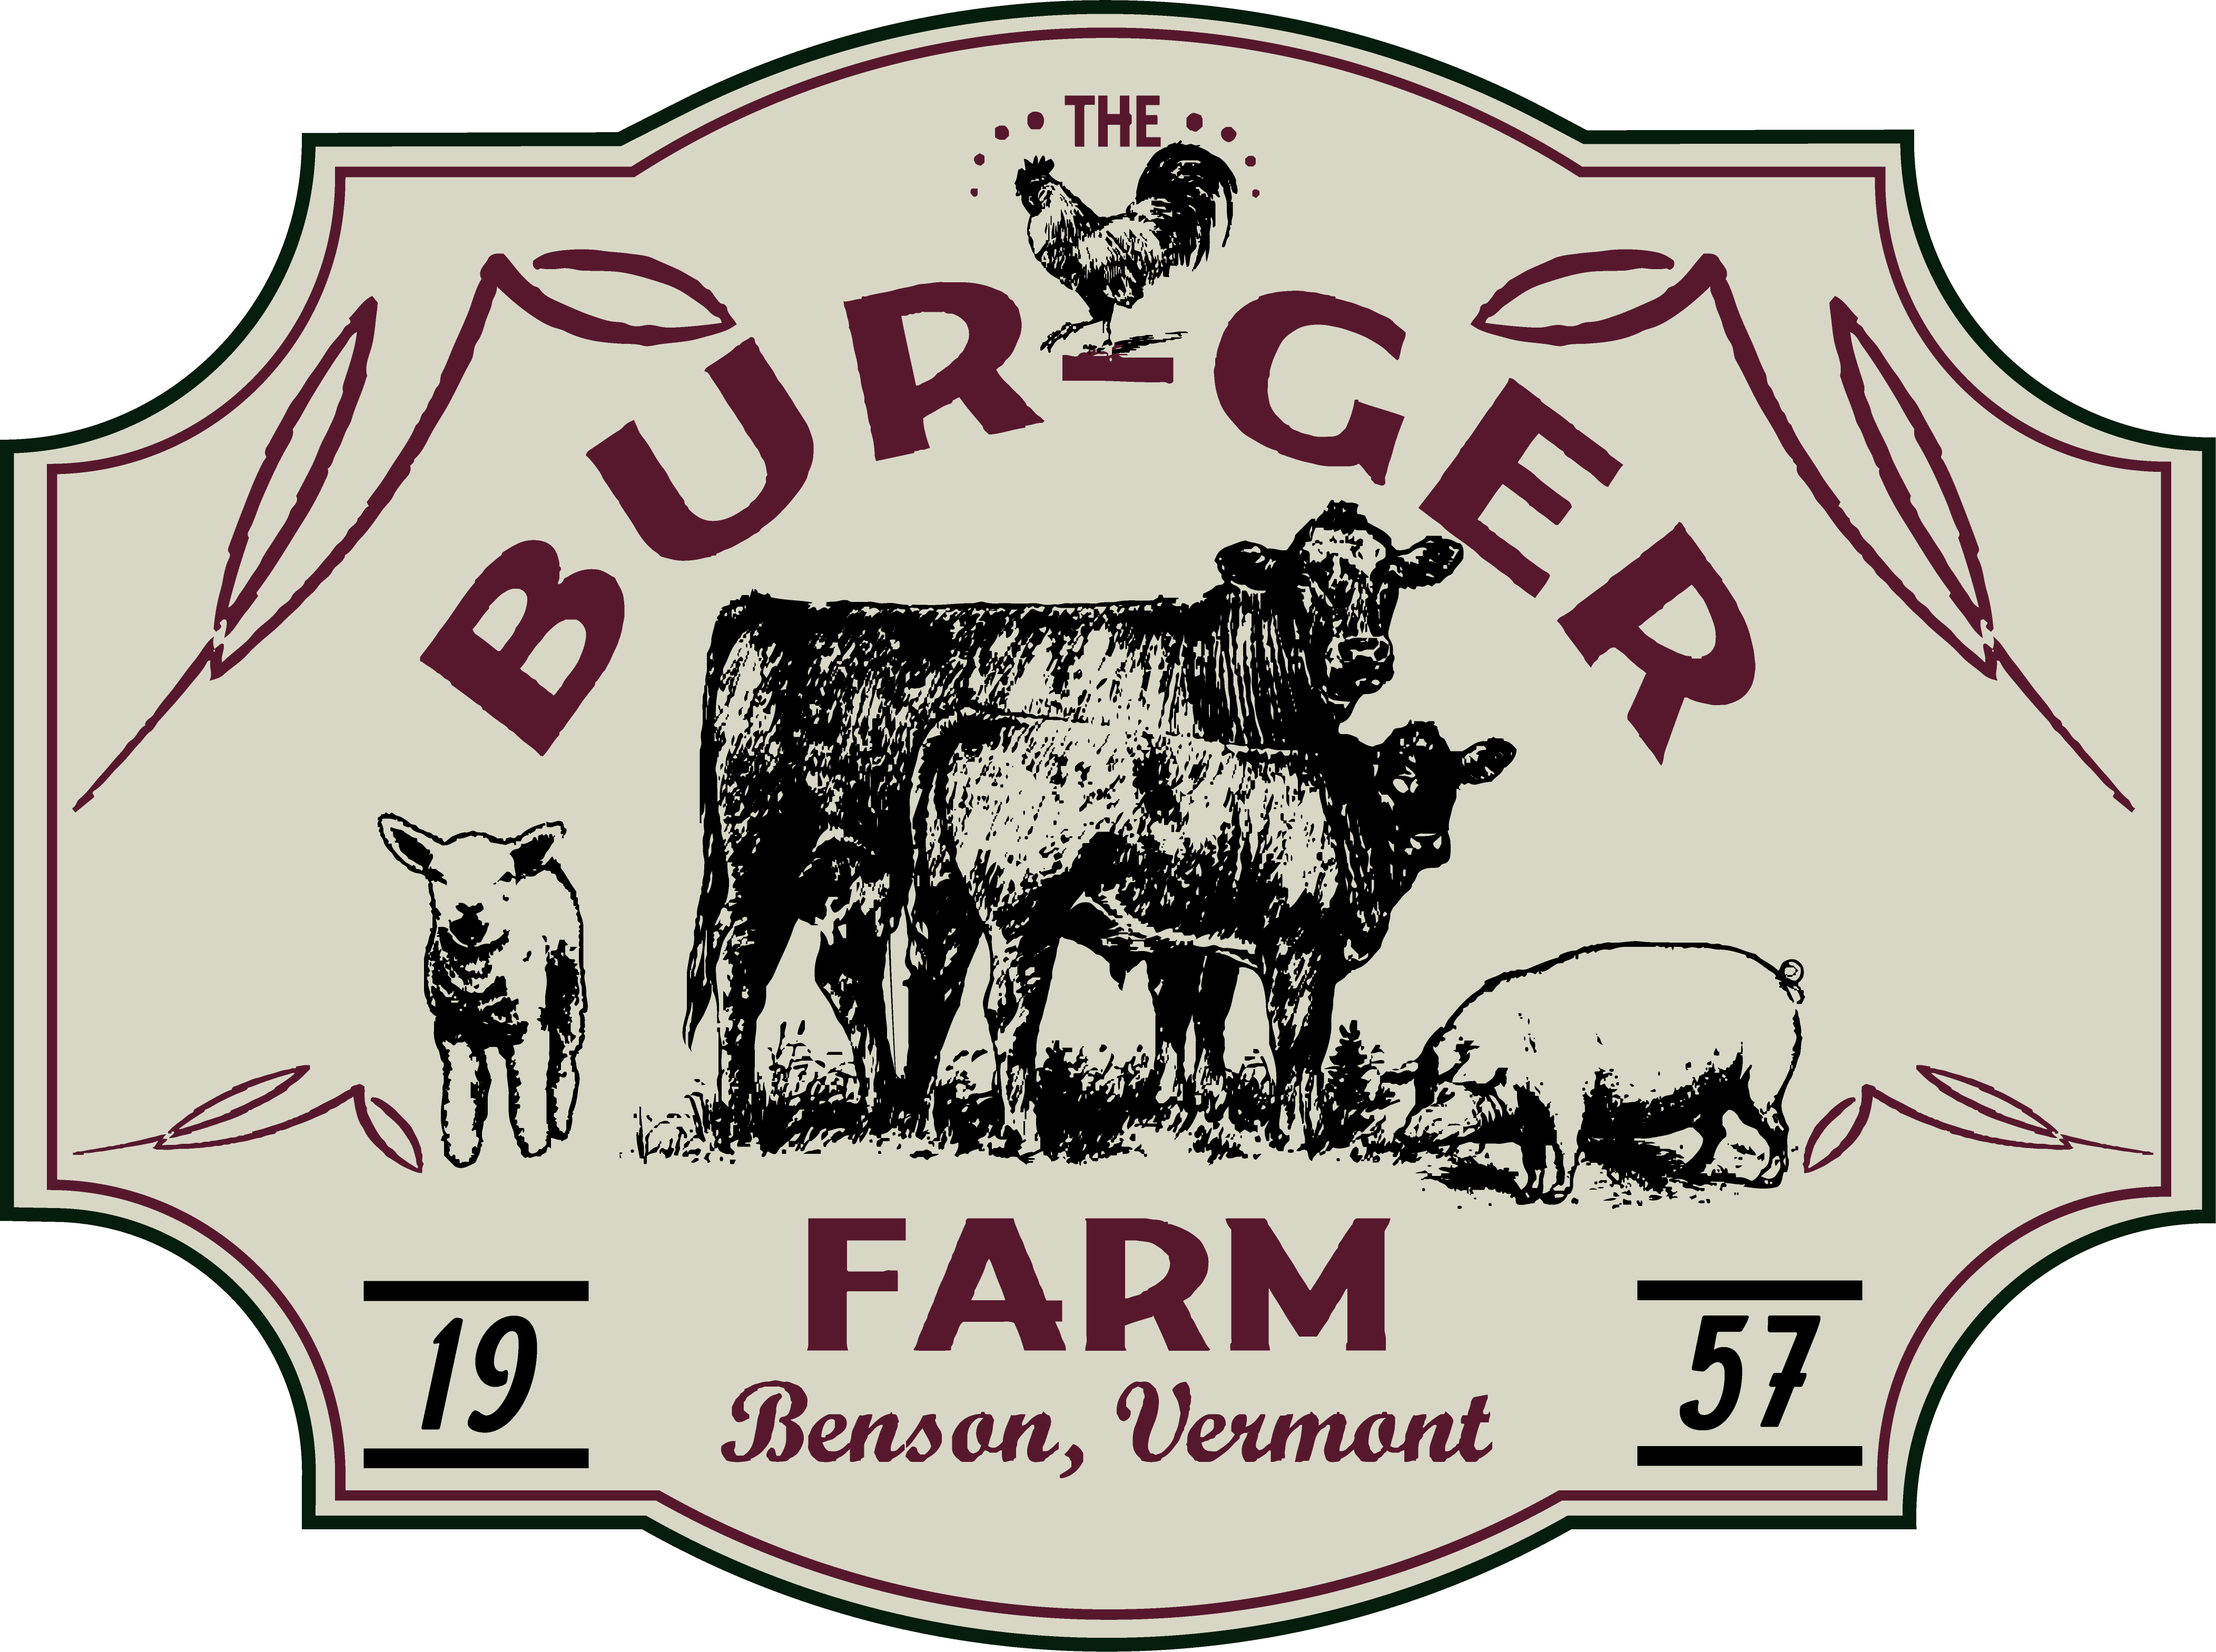 The Bur-Ger Farm Logo